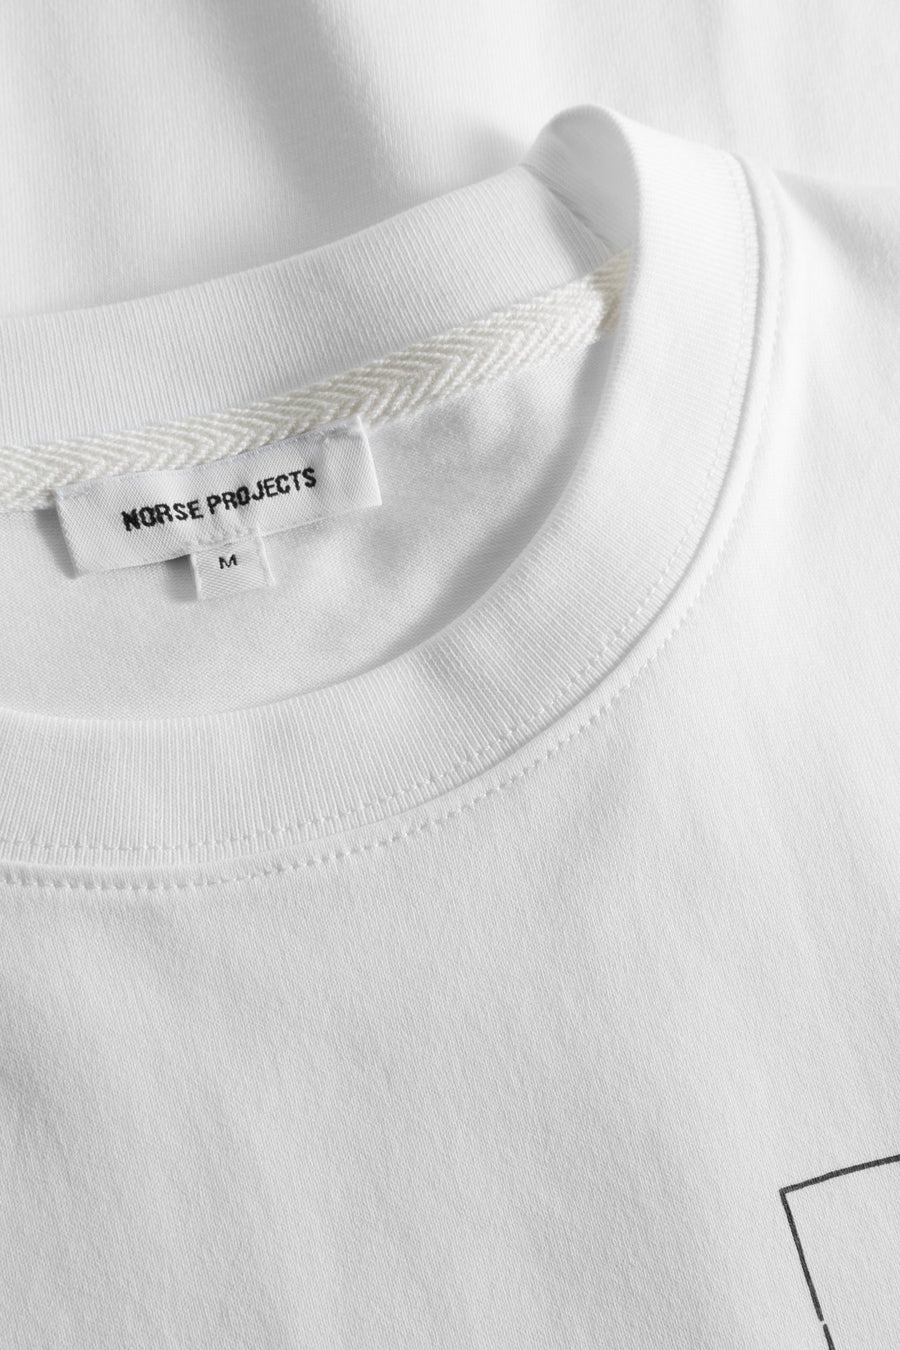 Johannes Organic Kanonbadsvej Print T-shirt-White